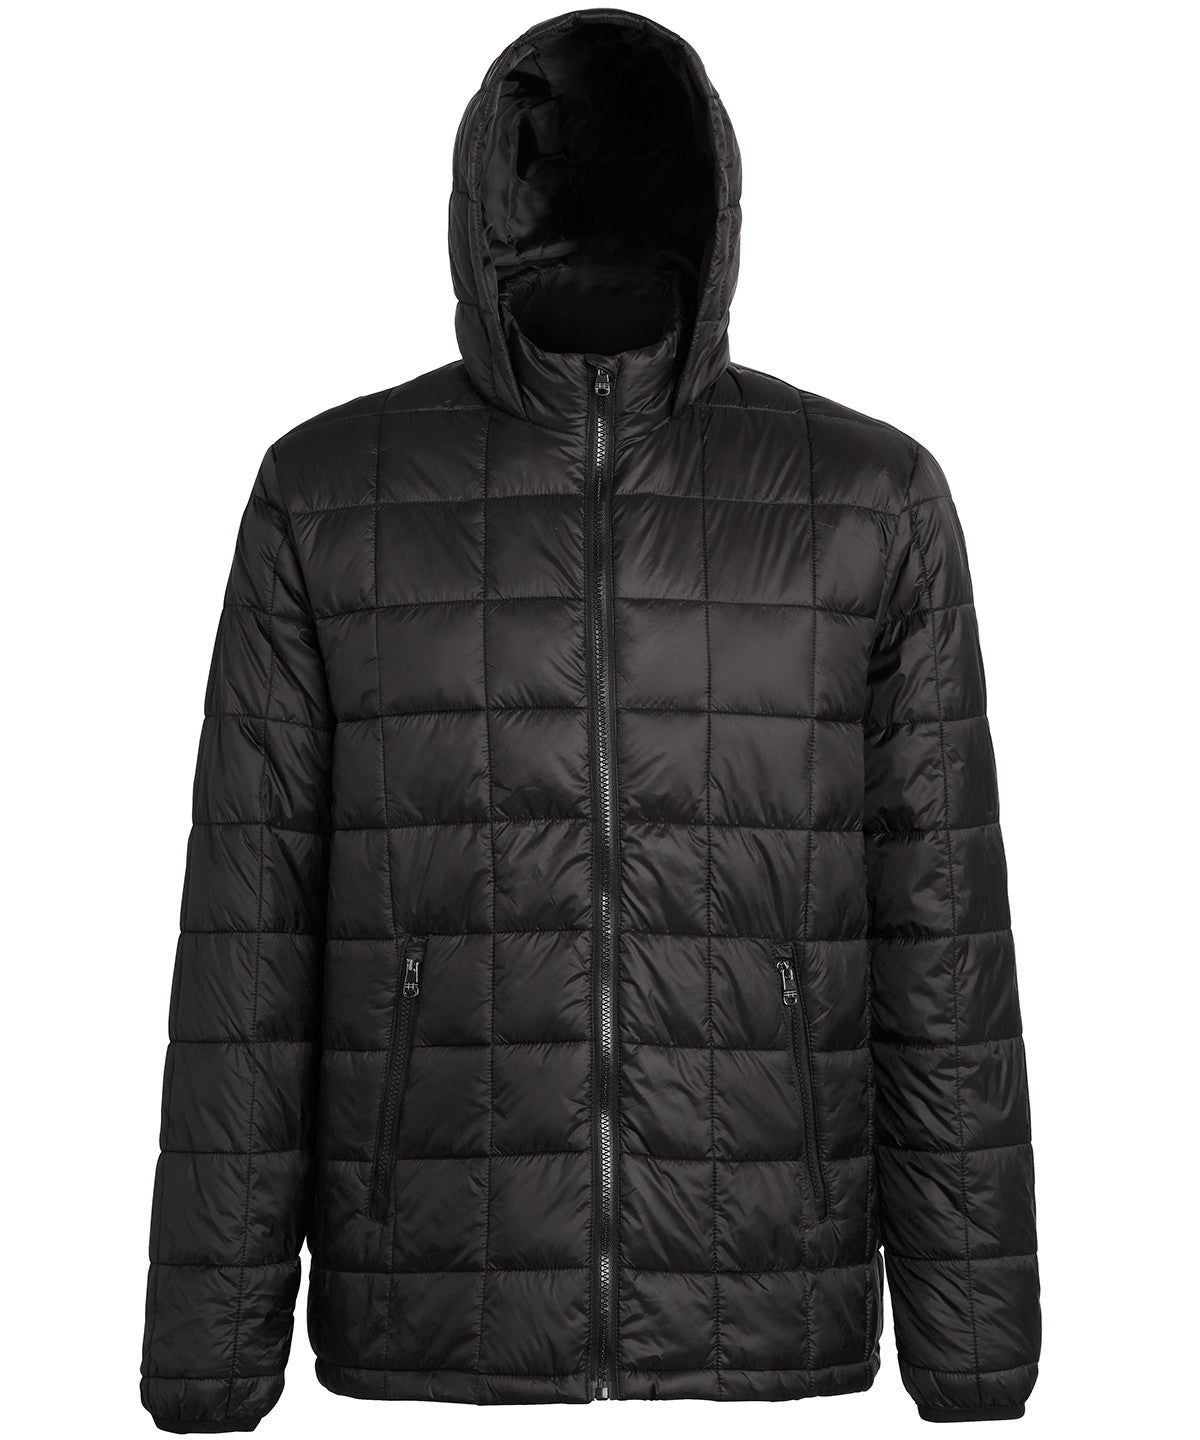 Personalised Jackets - Black 2786 Box quilt hooded jacket